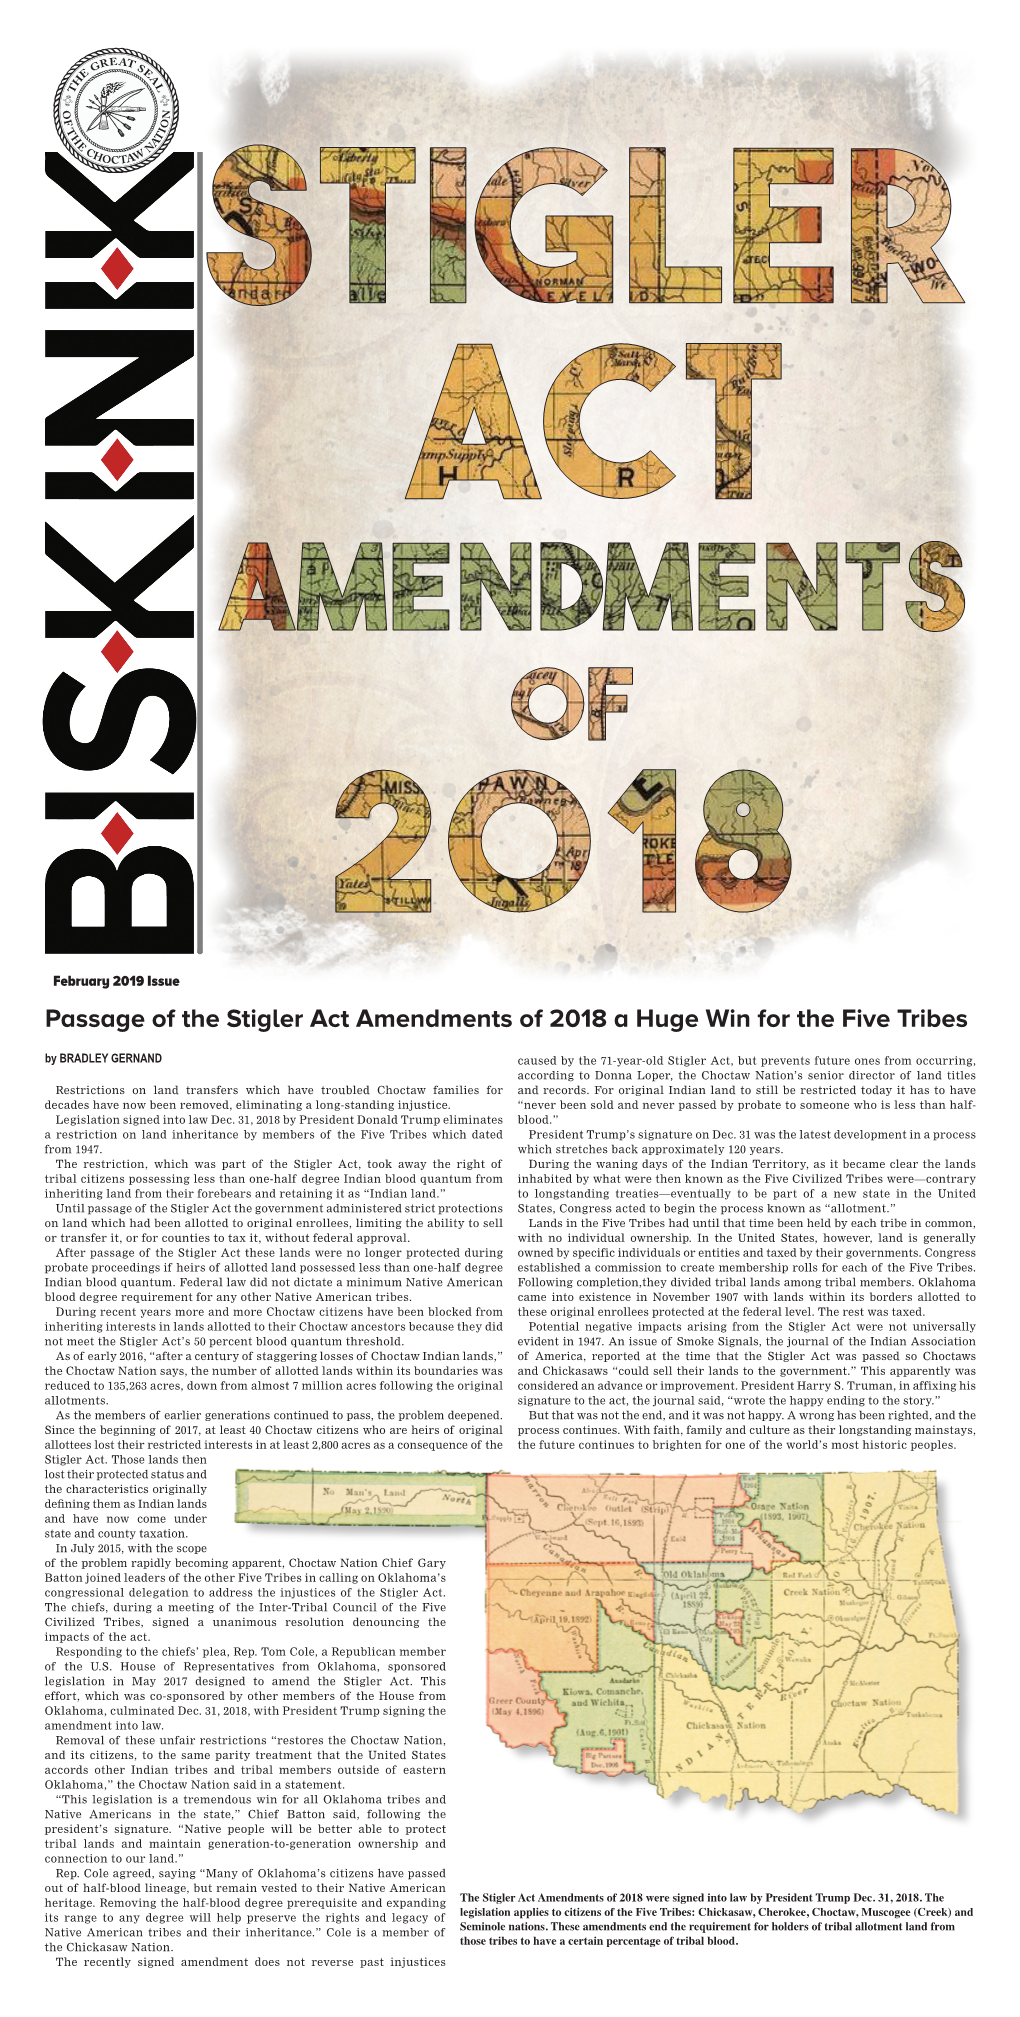 Passage of the Stigler Act Amendments of 2018 a Huge Win